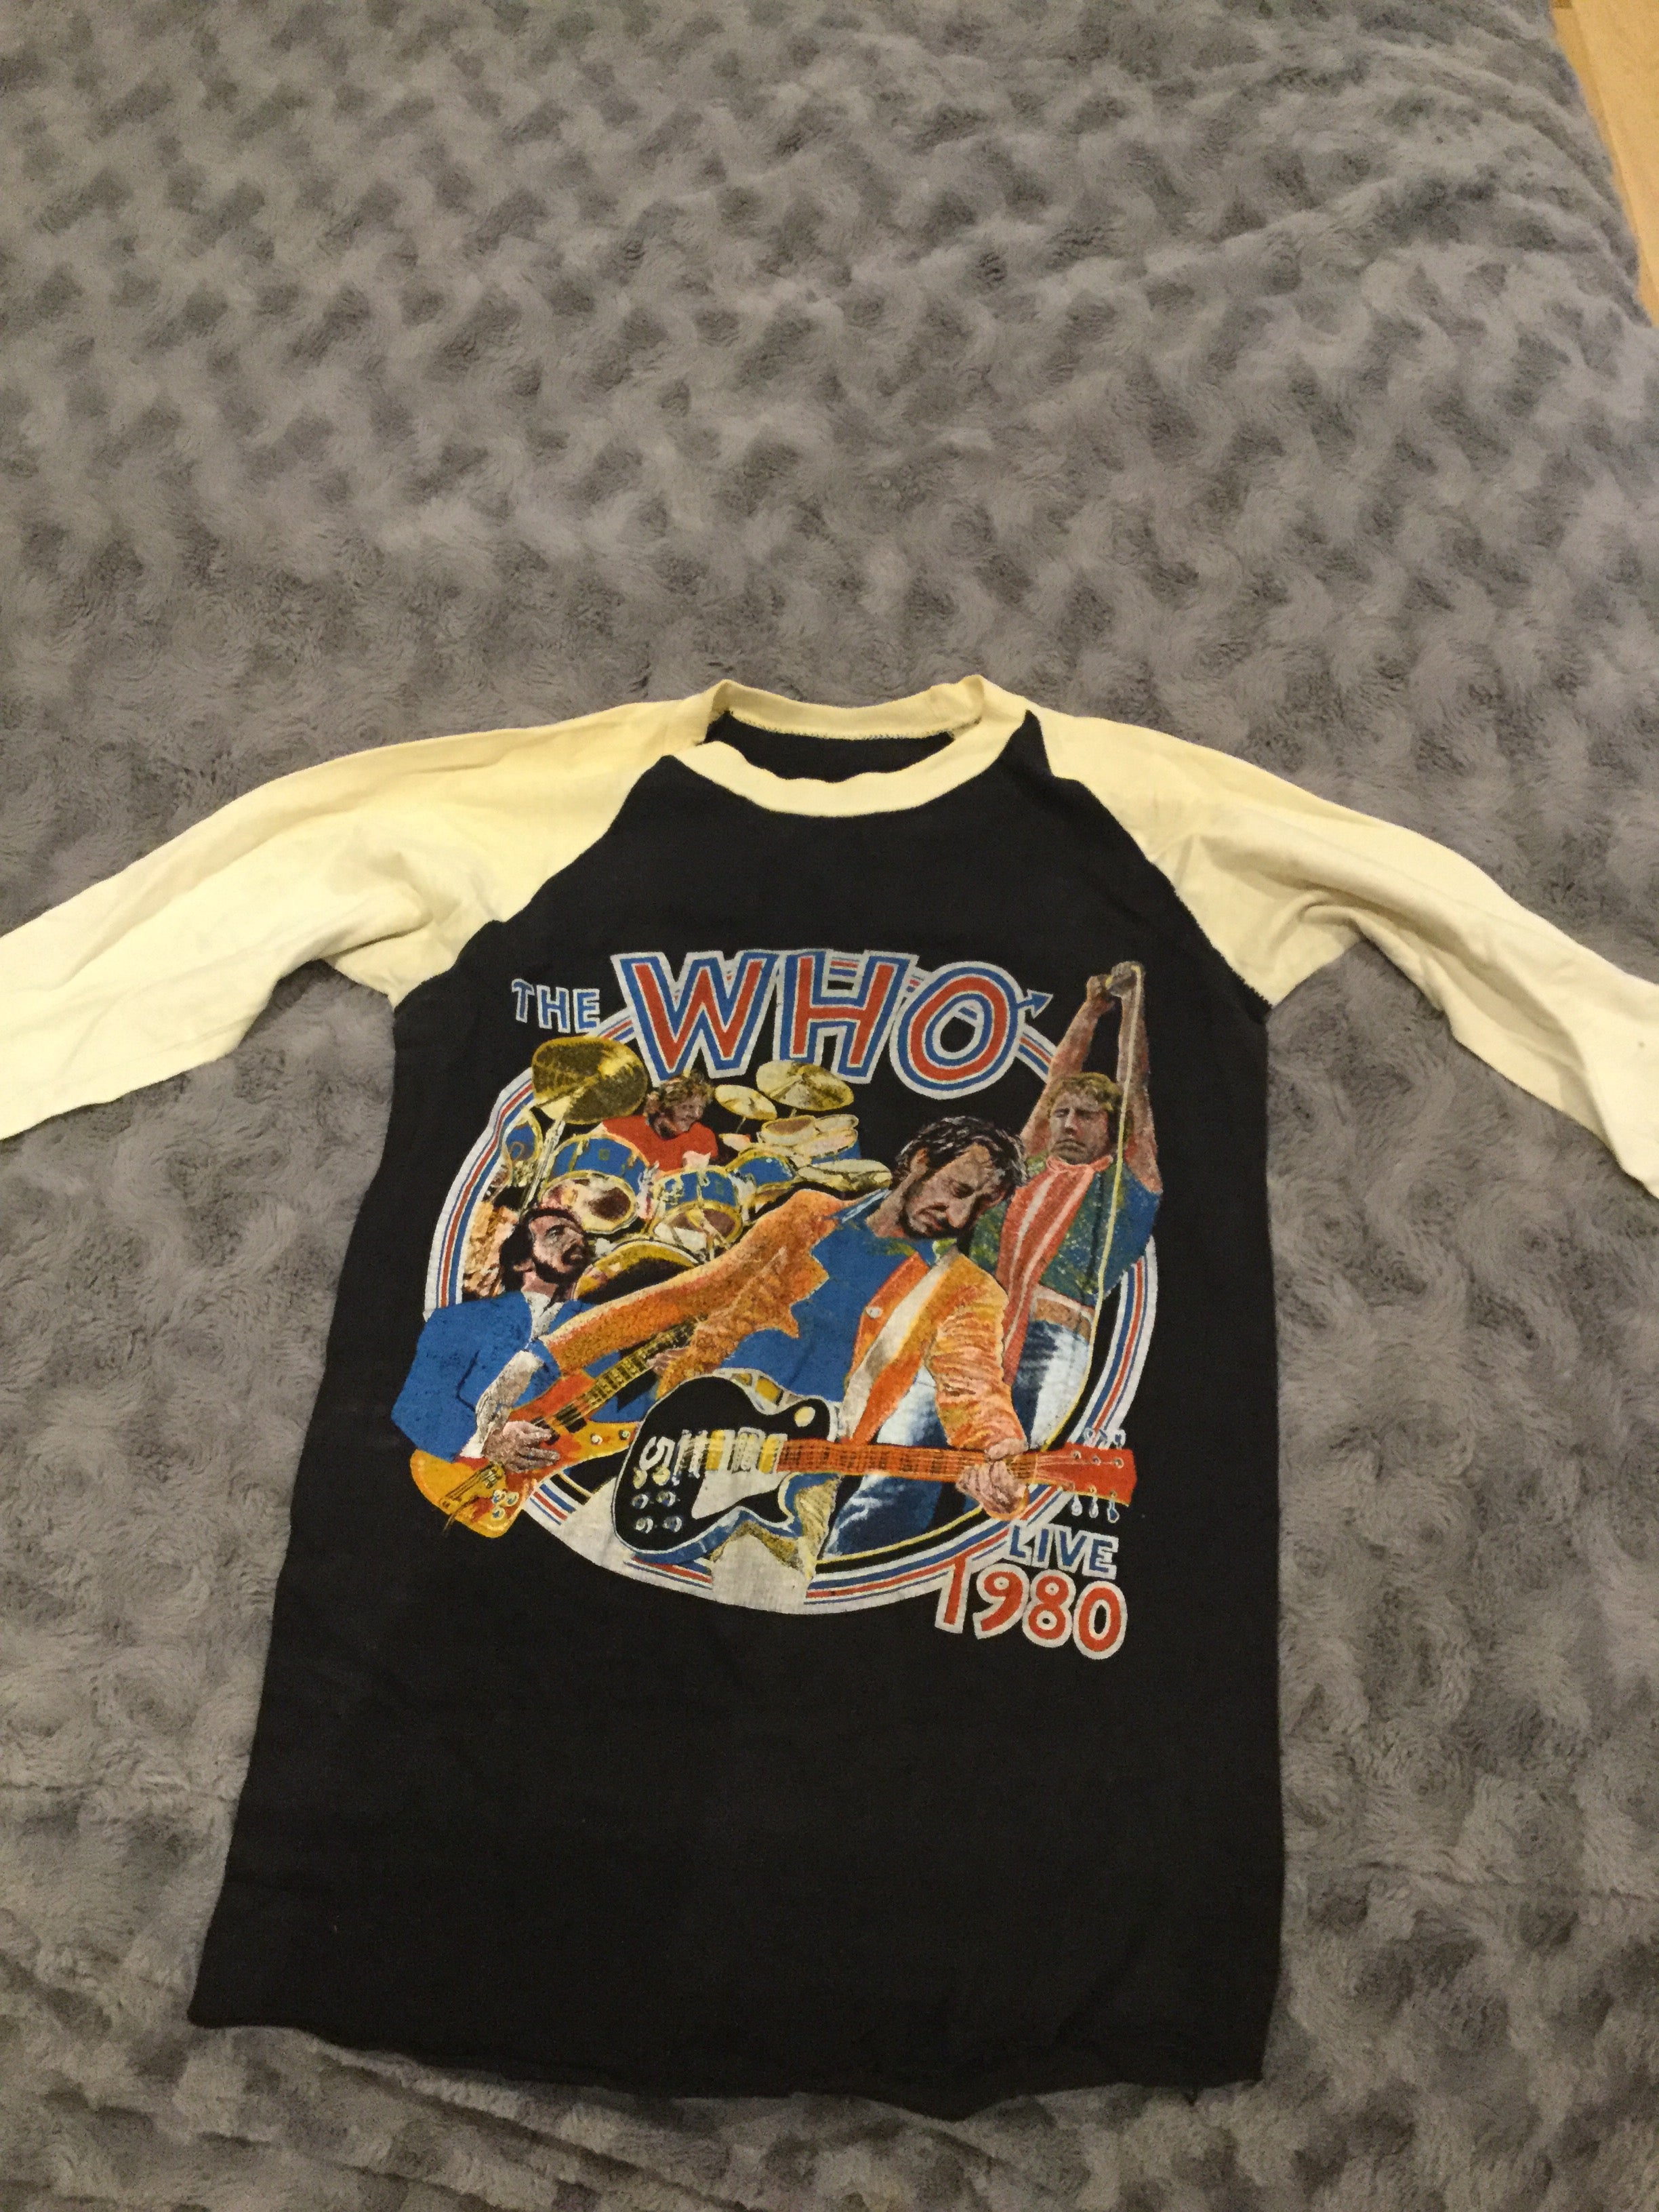 The WHO rare rock concert T-shirt 1980